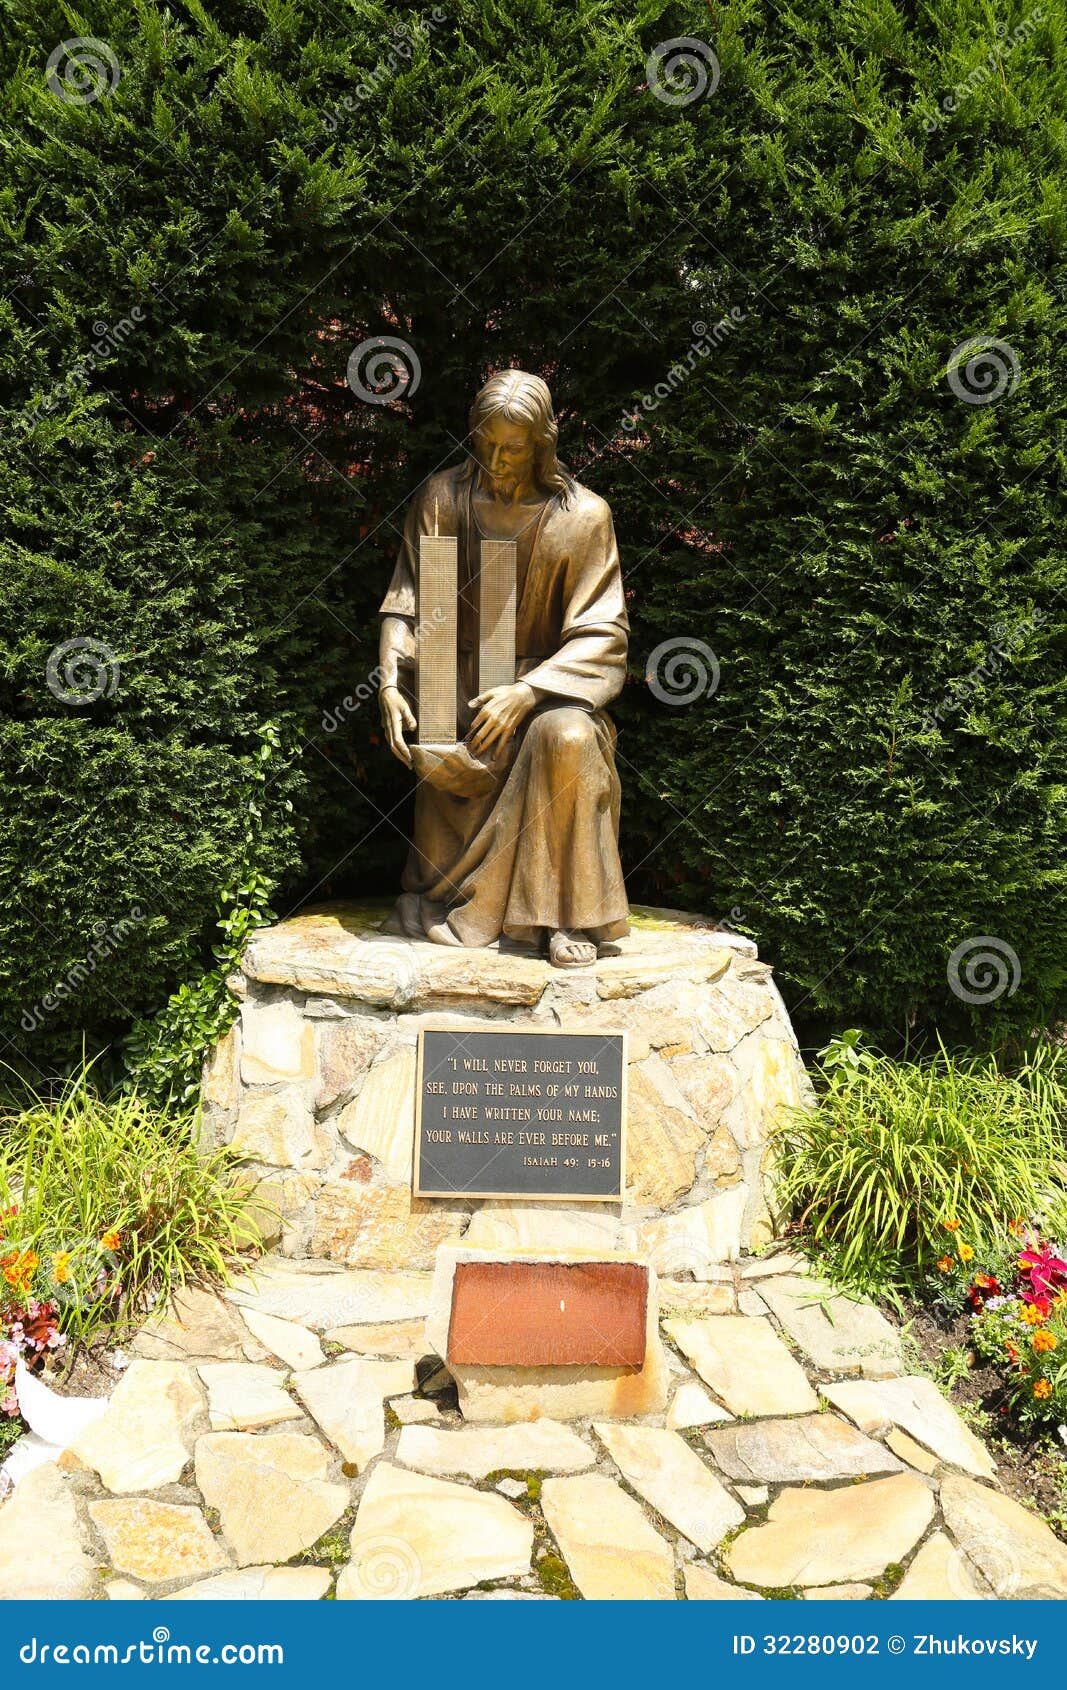 September 11 Memorial Bronze Statue Of Jesus Christ